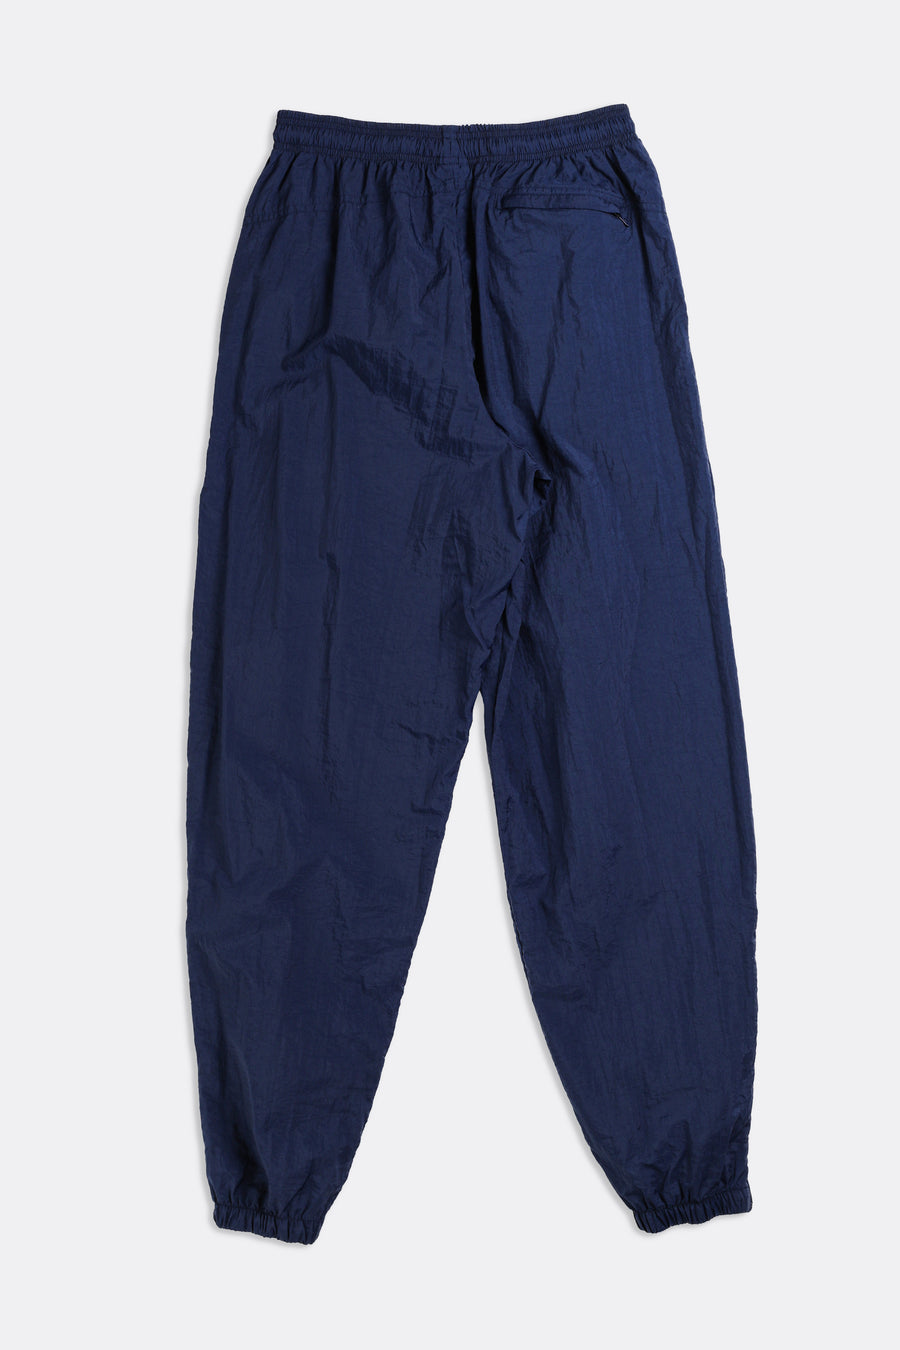 Vintage Nike Windbreaker Pants - XS, S